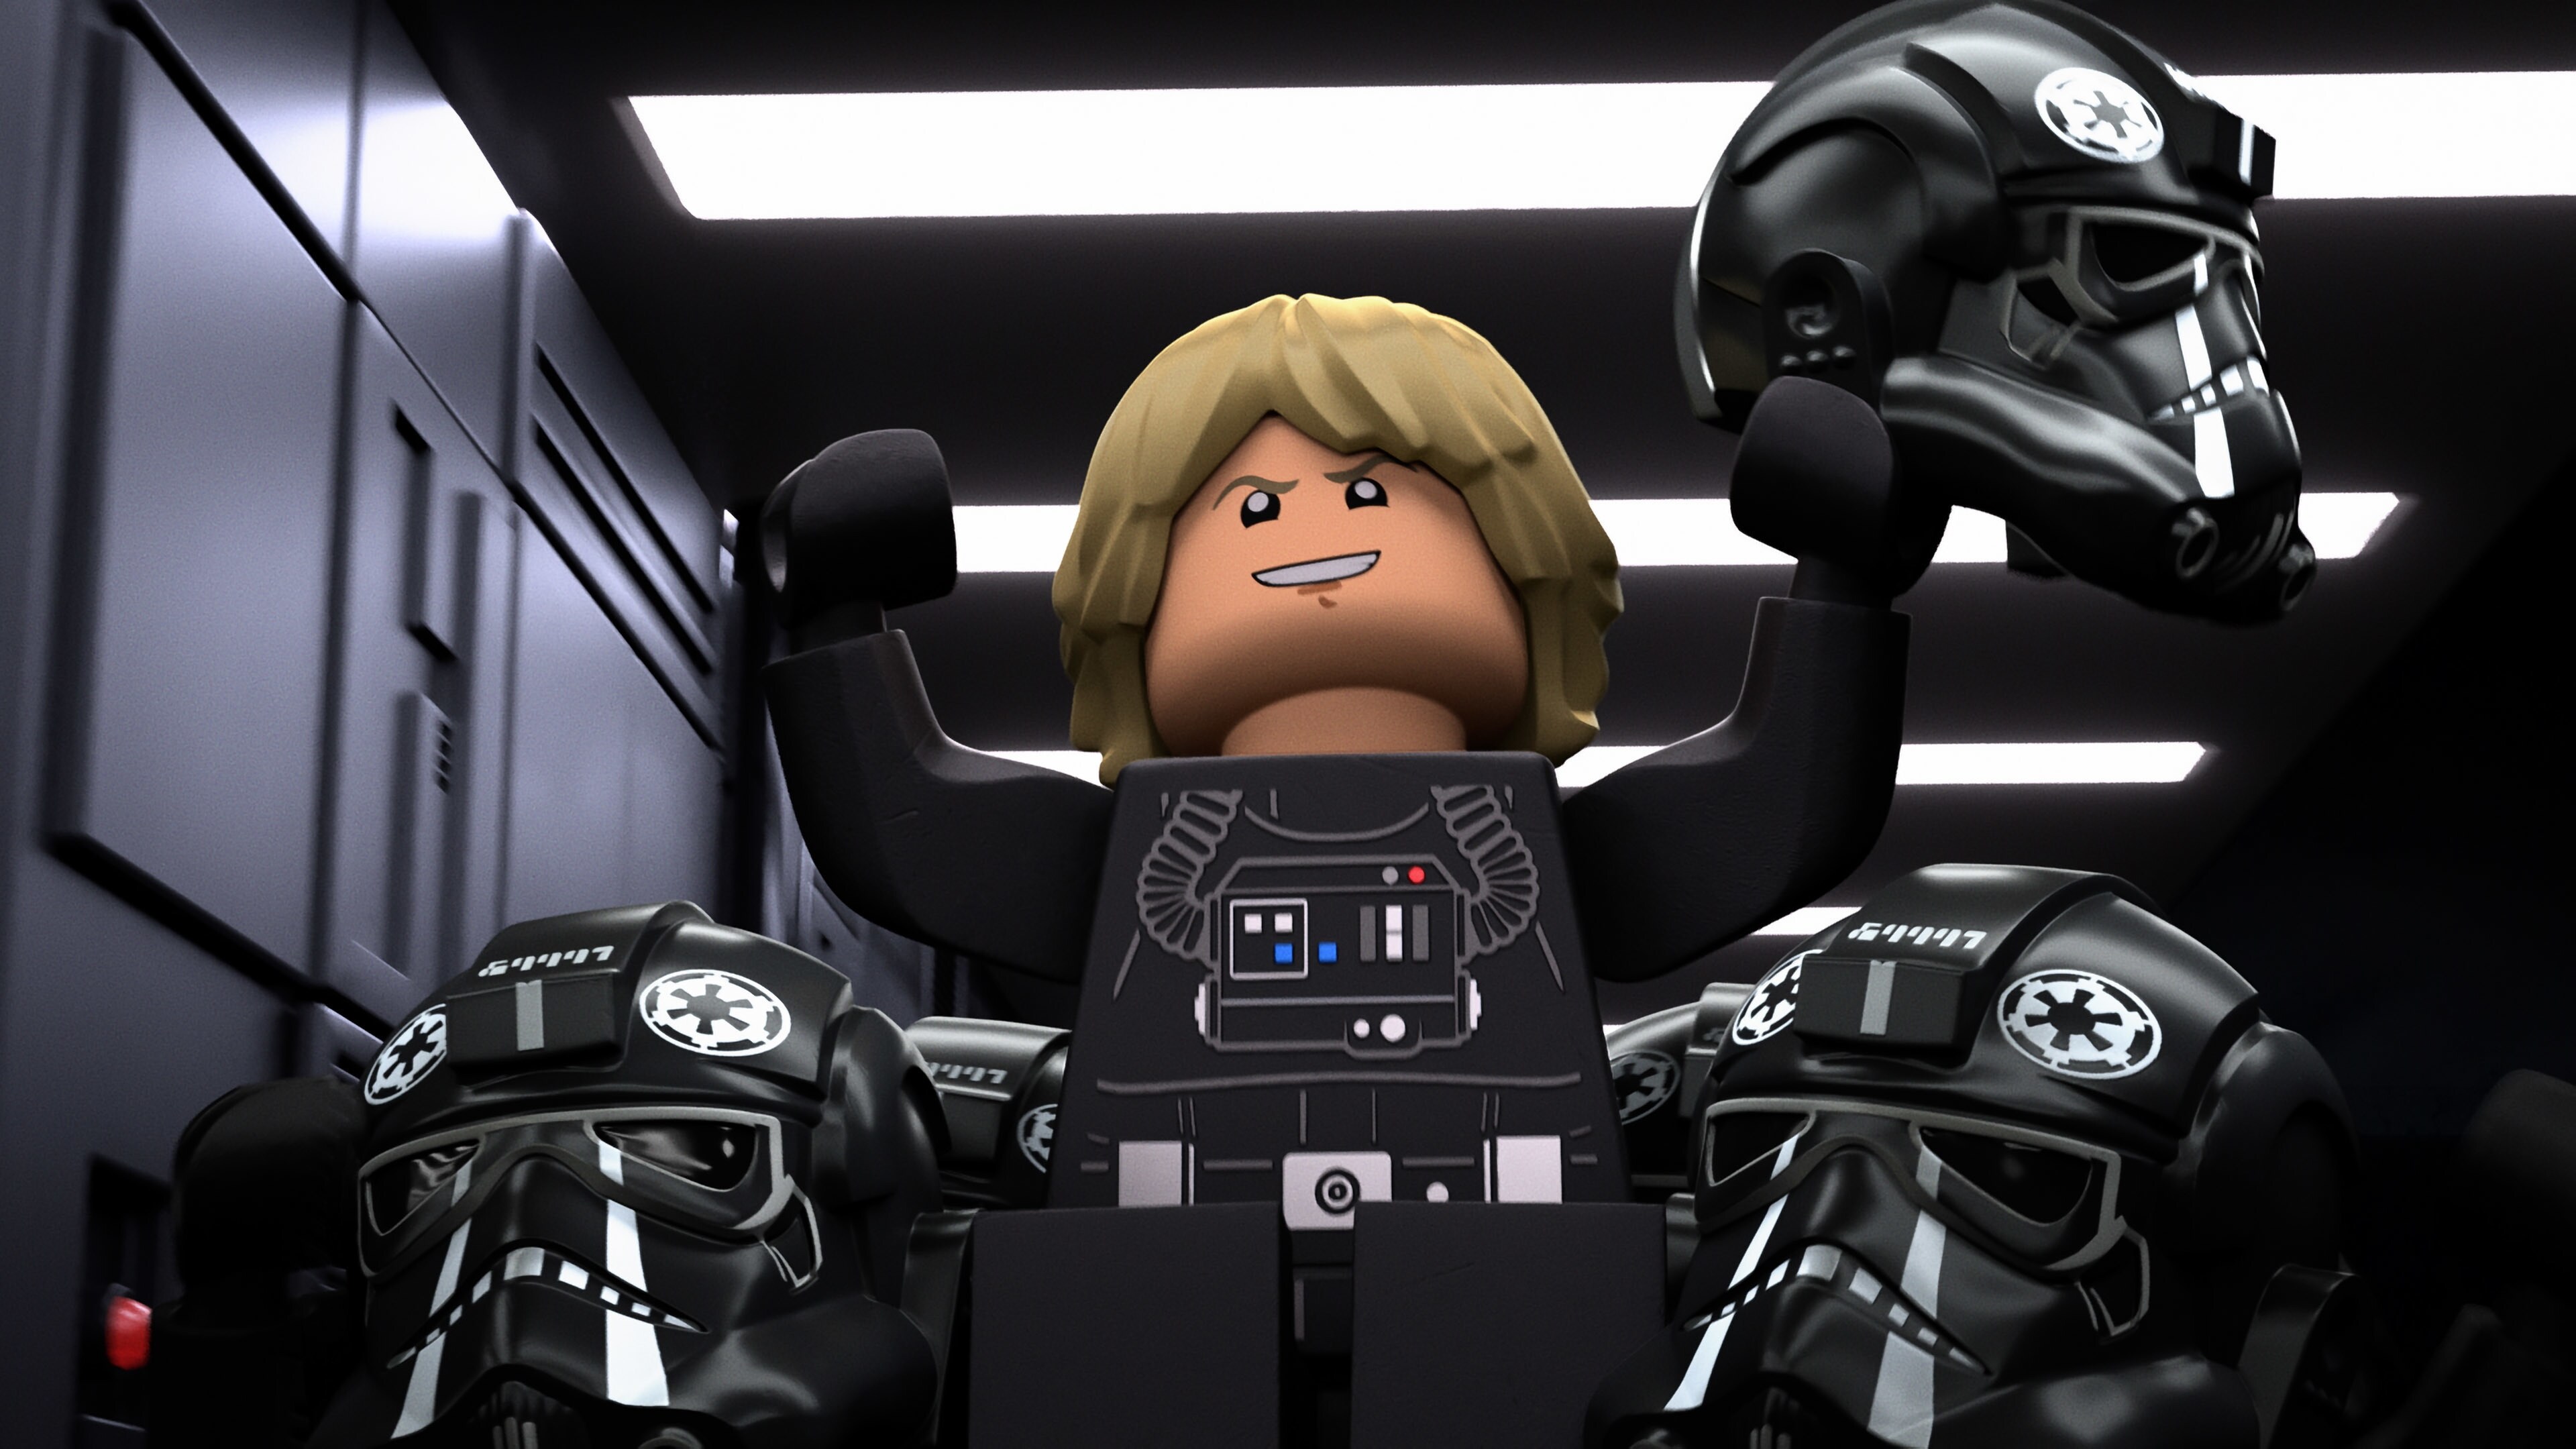 Disney+ Debuts Hair-raising Trailer For “Lego® Star Wars Terrifying Tales”